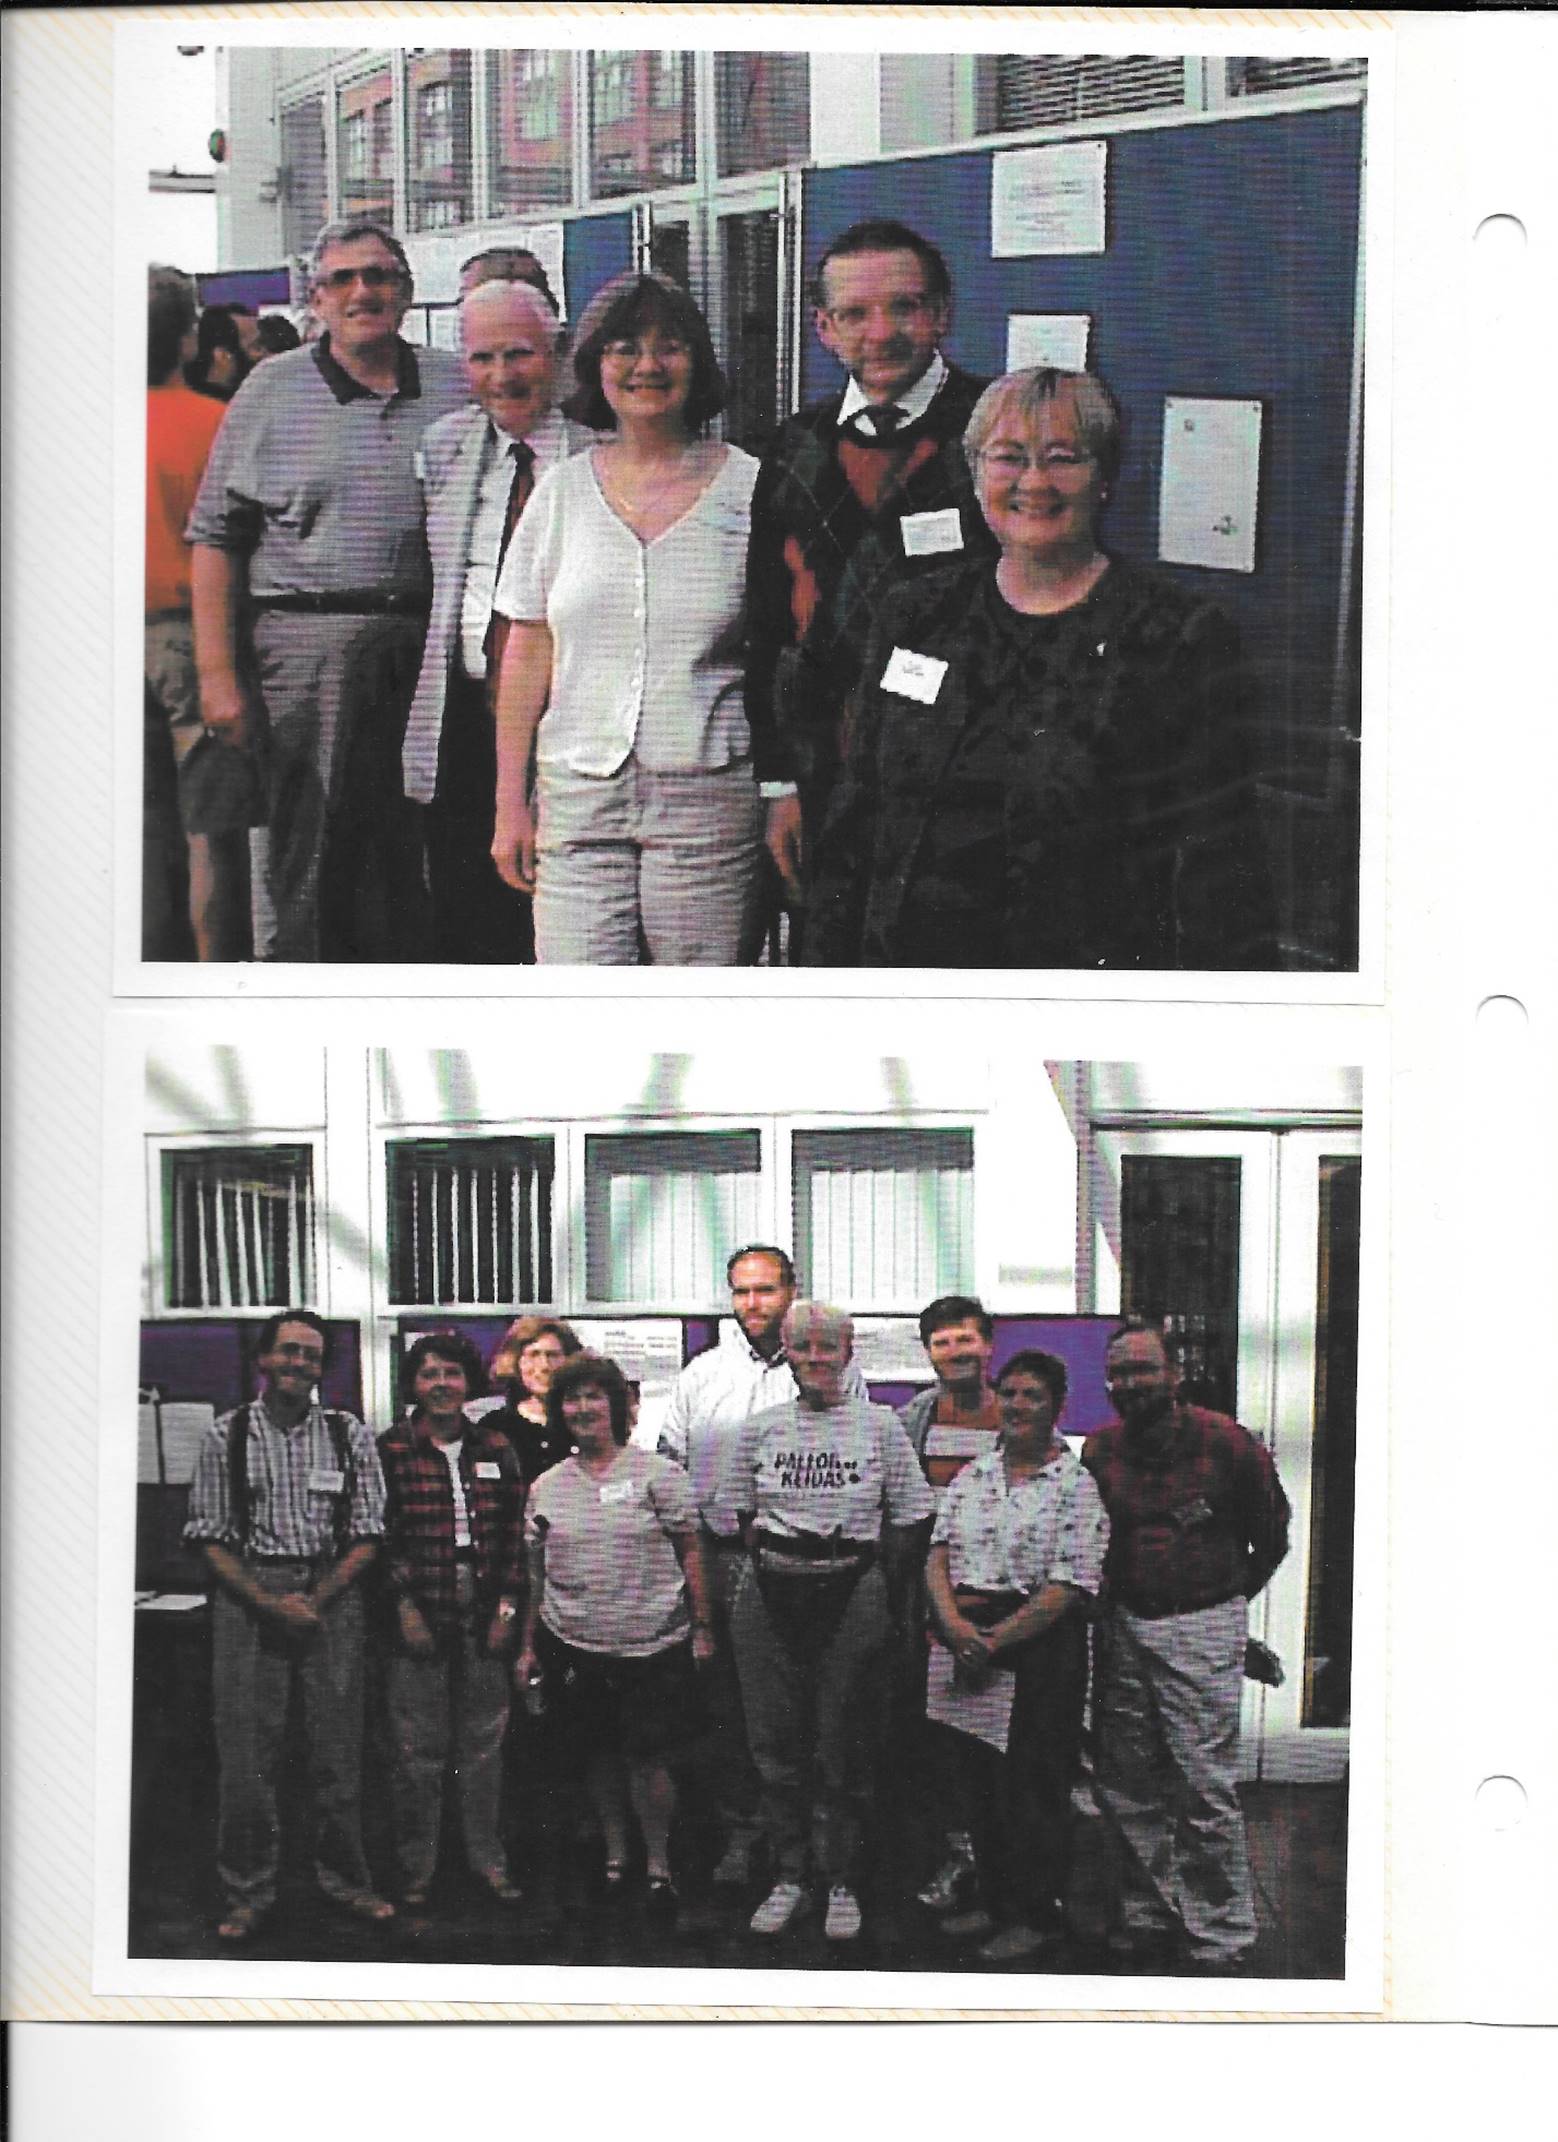 ITiCSE 1998 Working Group
photos